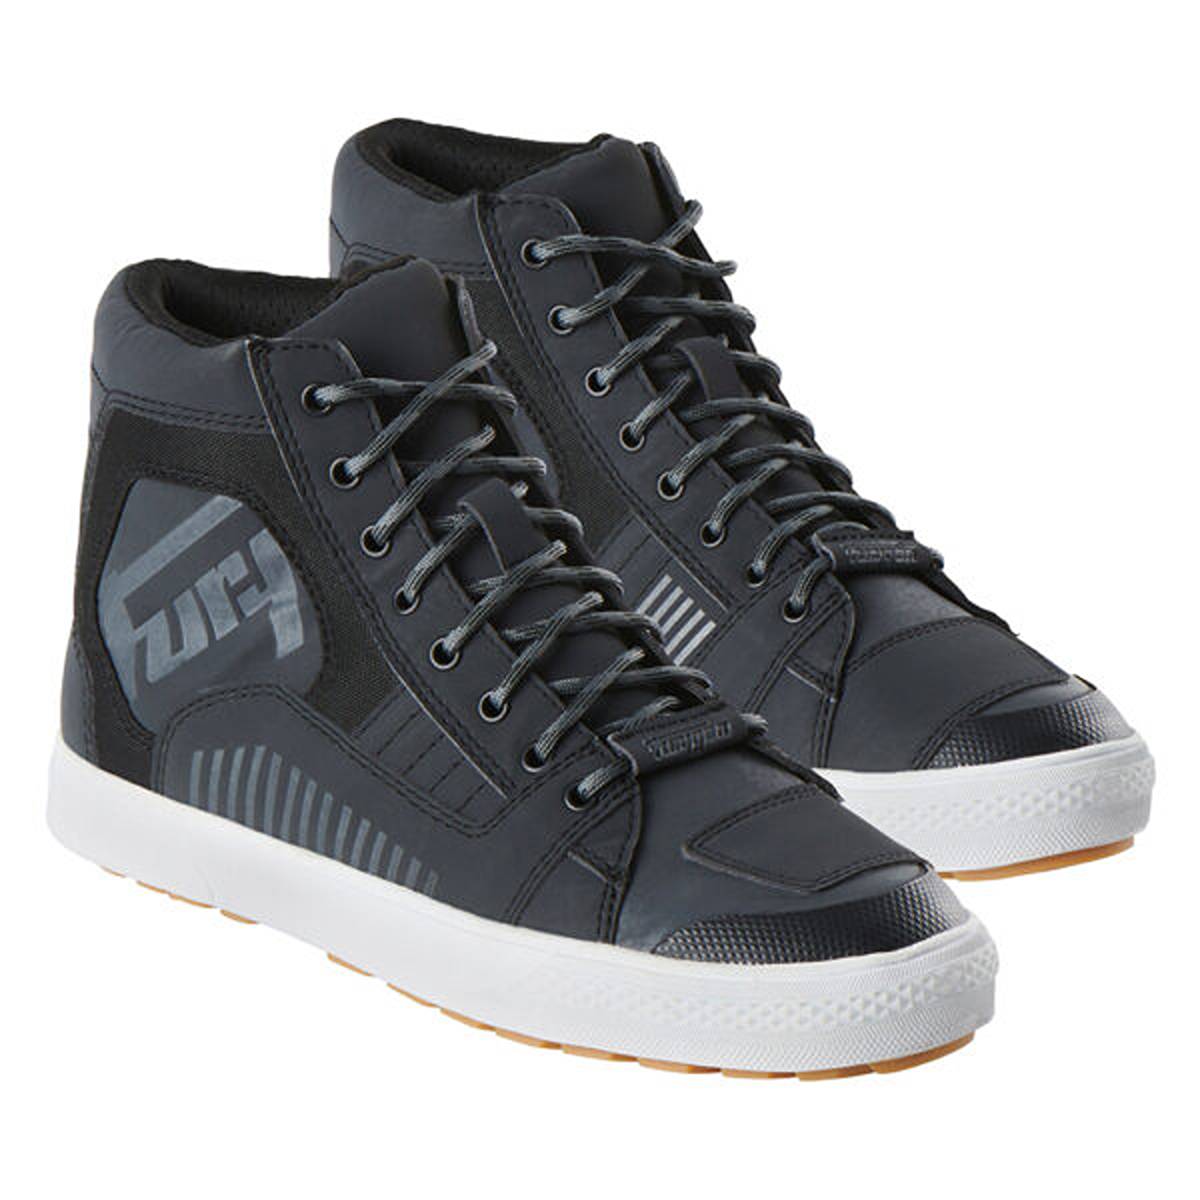 Image of Furygan Sacramento D30 Shoes Black Size 38 ID 3435980368234